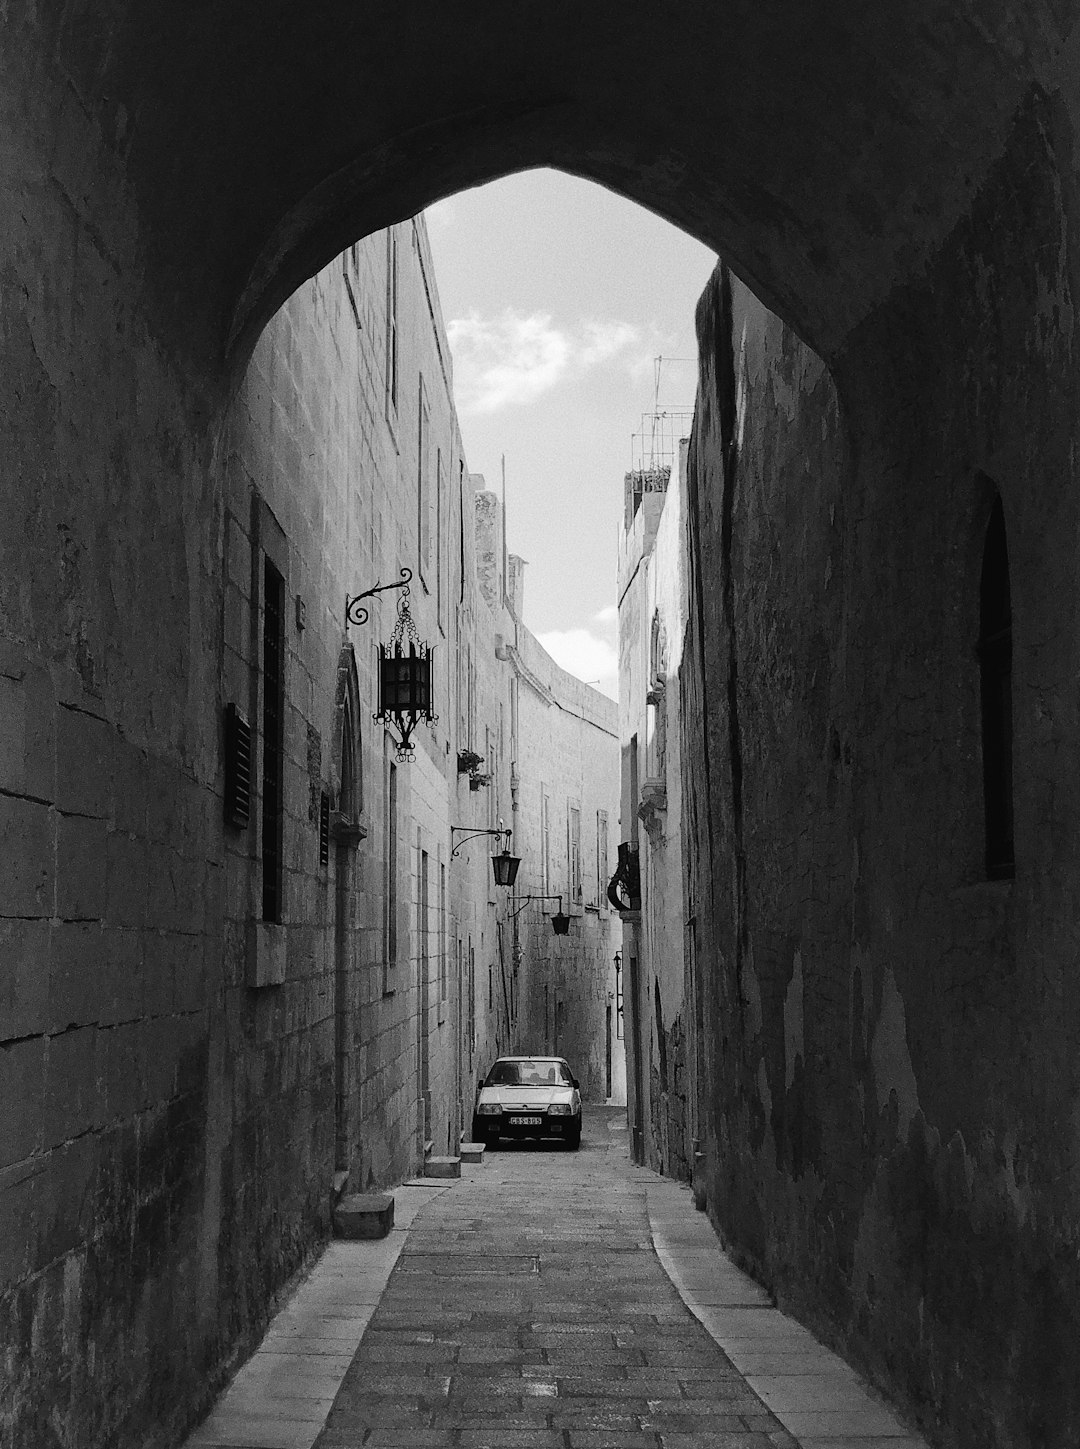 Architecture photo spot Misraħ San Pawl Fort St. Elmo